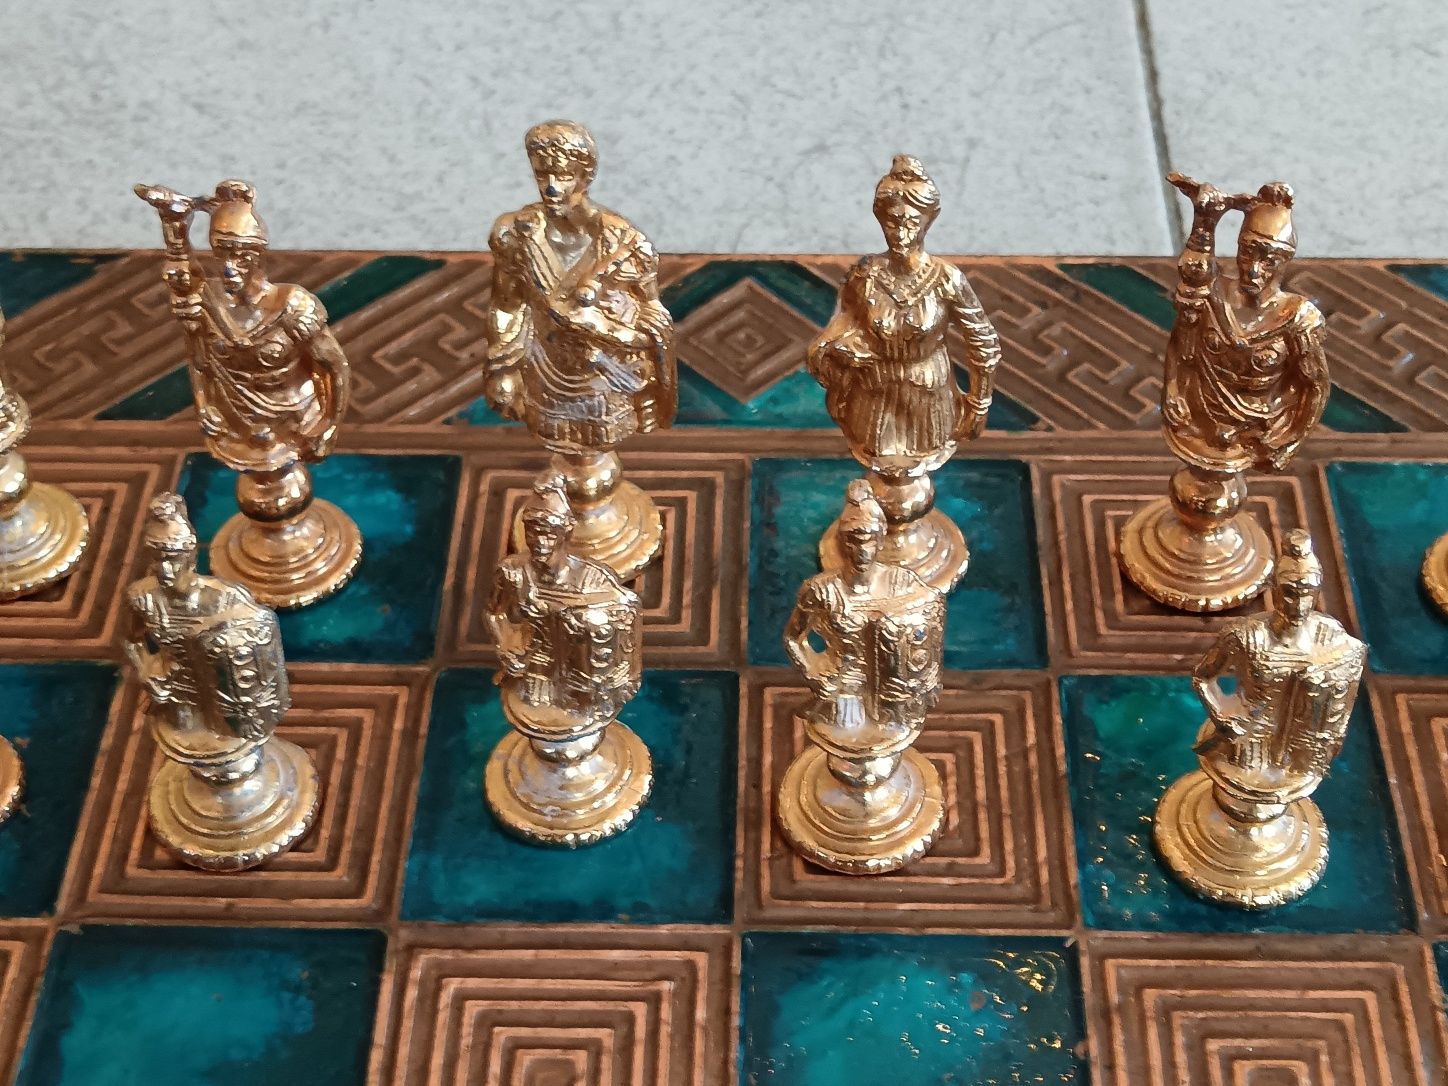 Метален шах с метална дъска